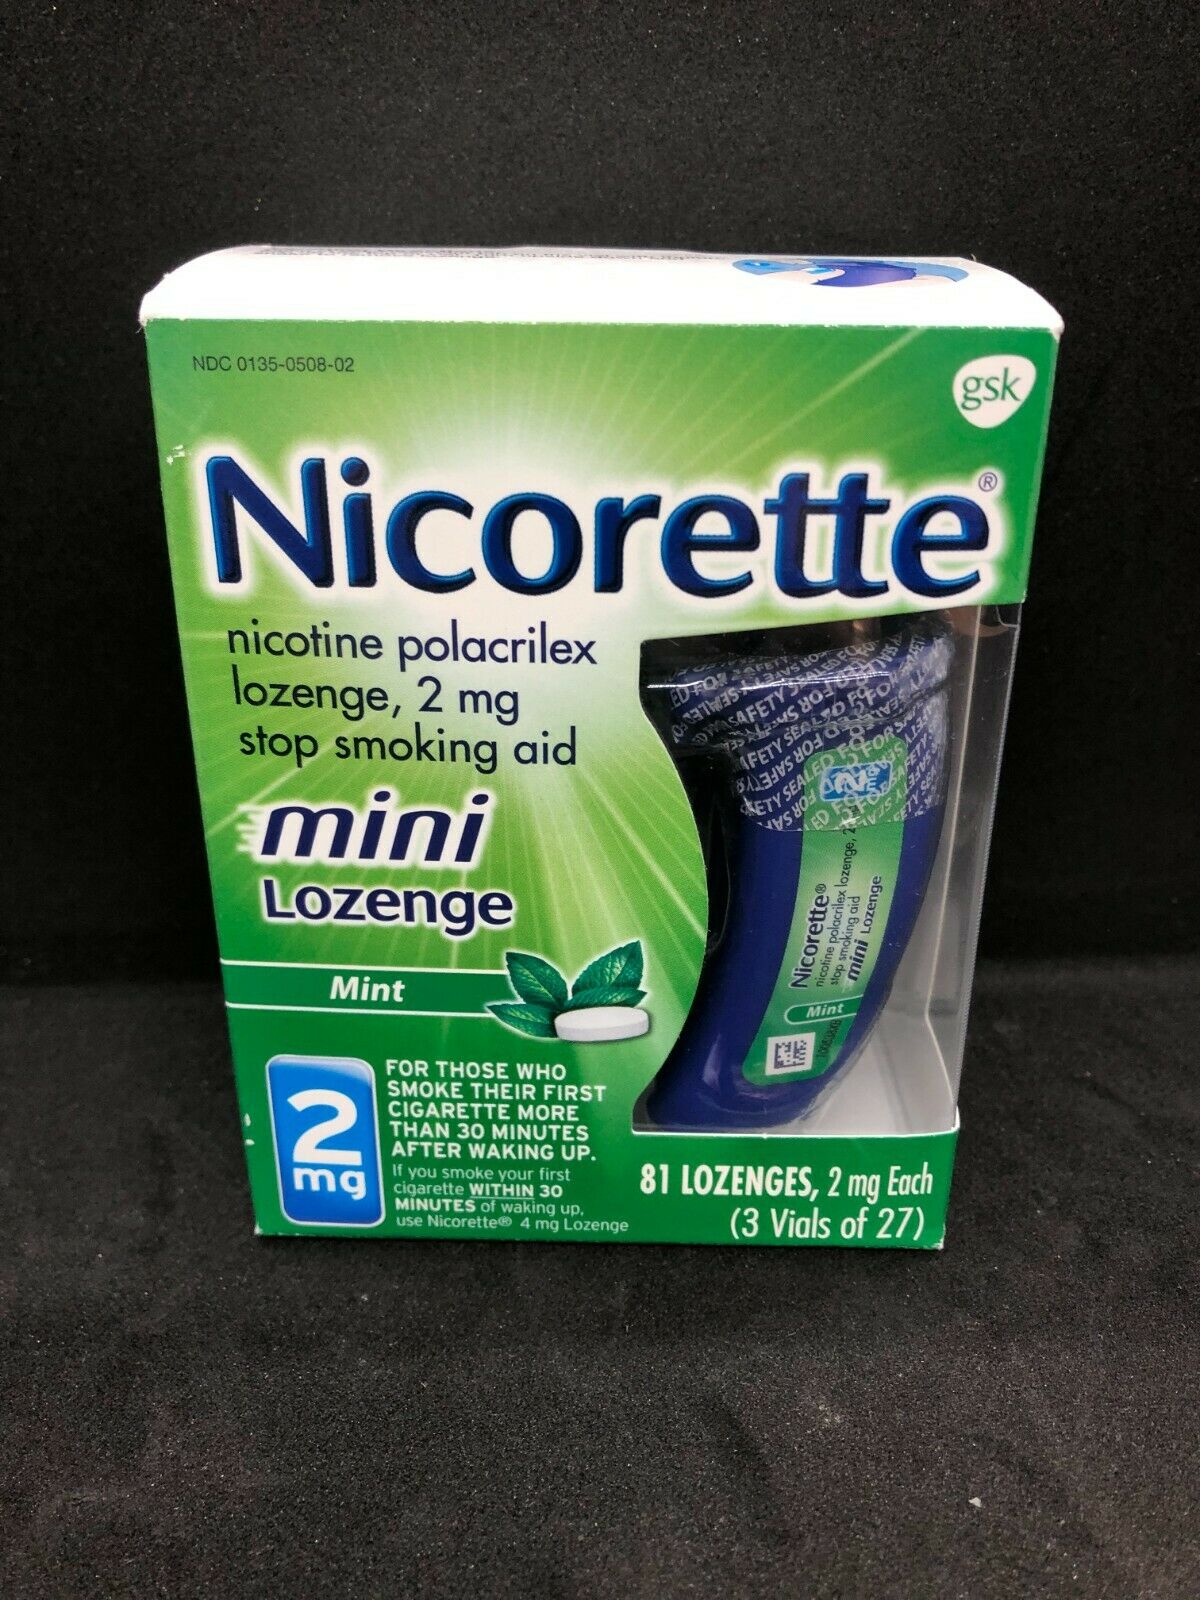 Nicorette Mini Lozenges 2mg Mint 81 Pieces, Exp. 6/21, Fast Free Shipping!!